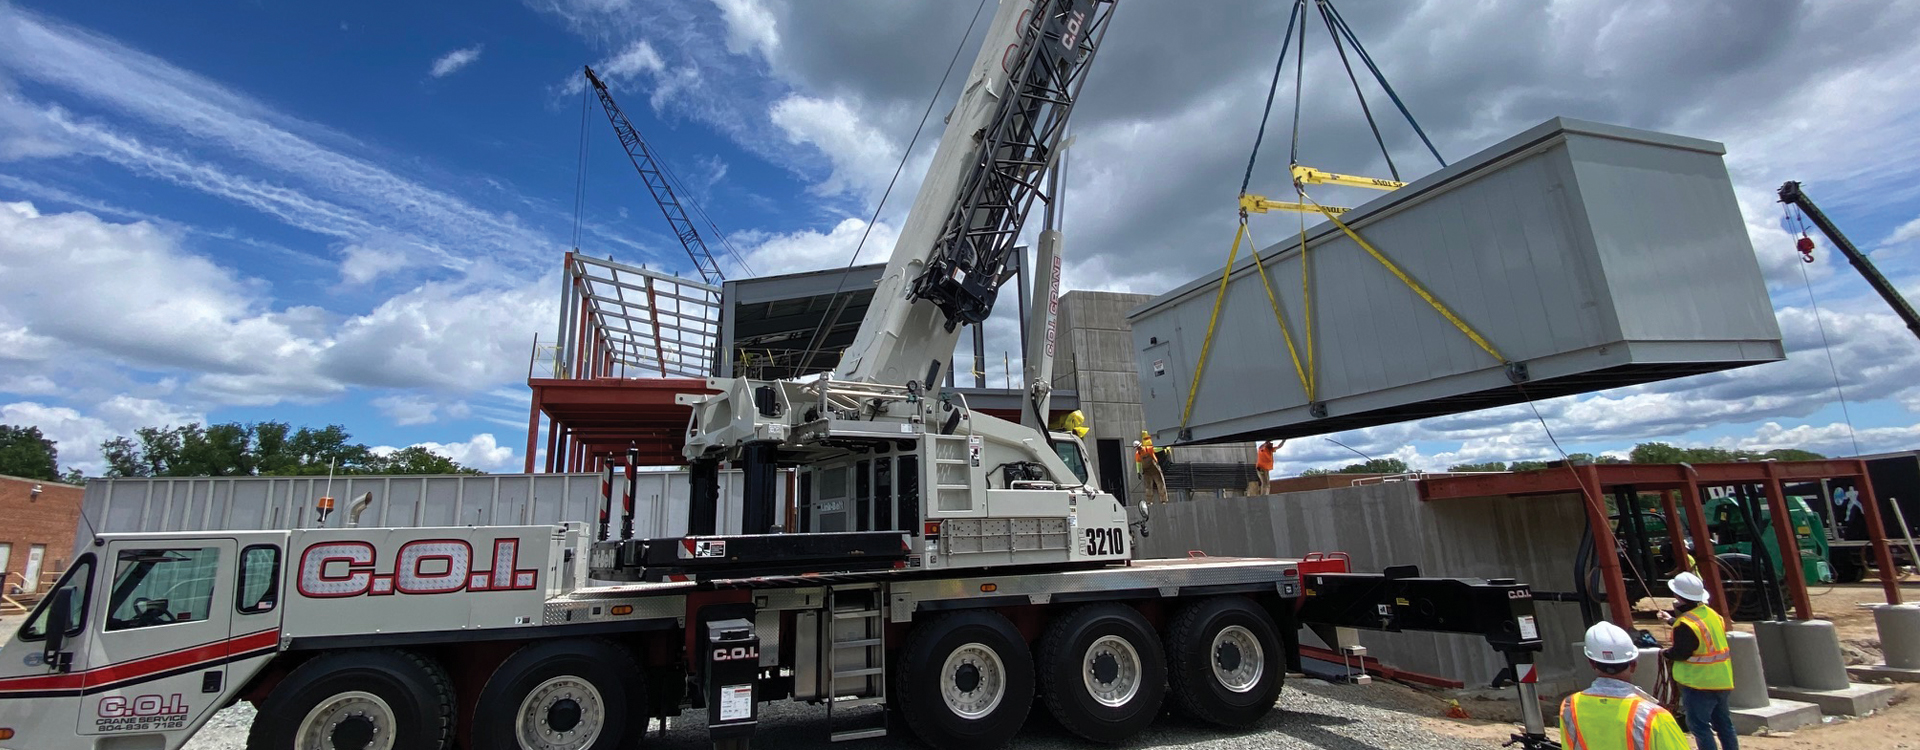 cranes lift large equipment onto building